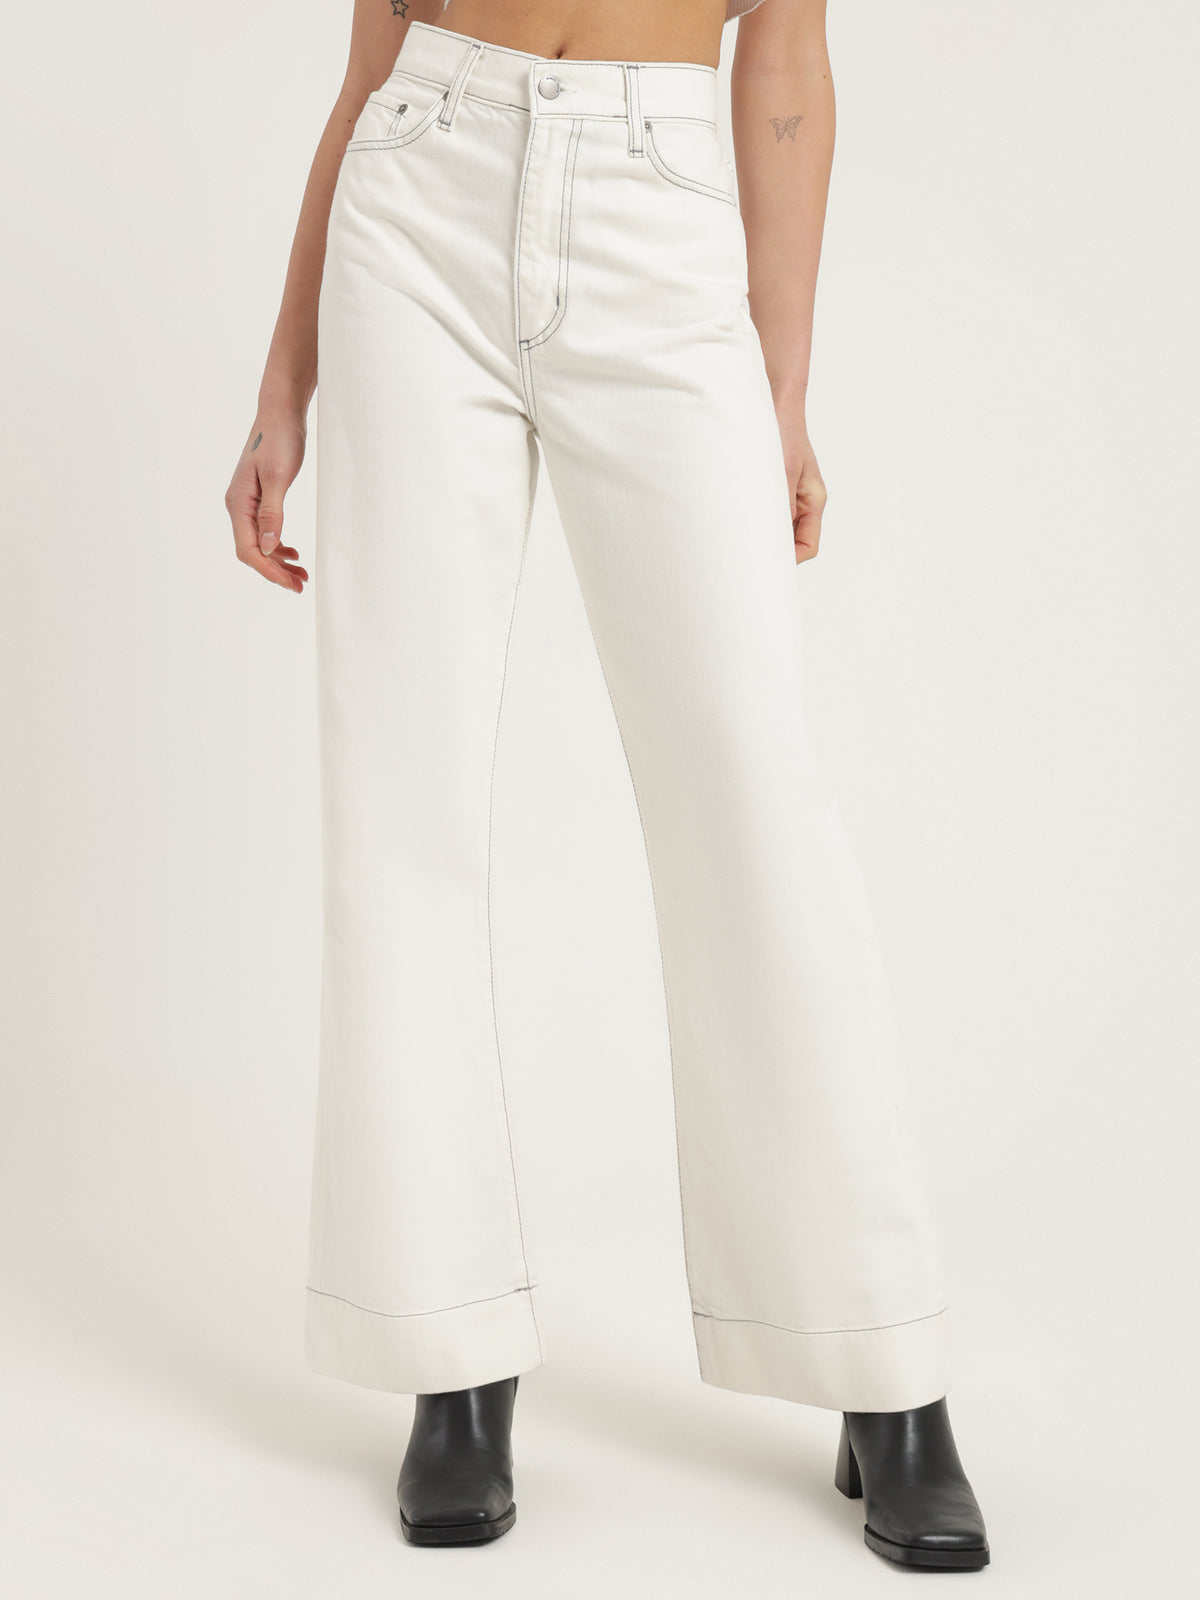 Anita Flare Jeans in Dream White